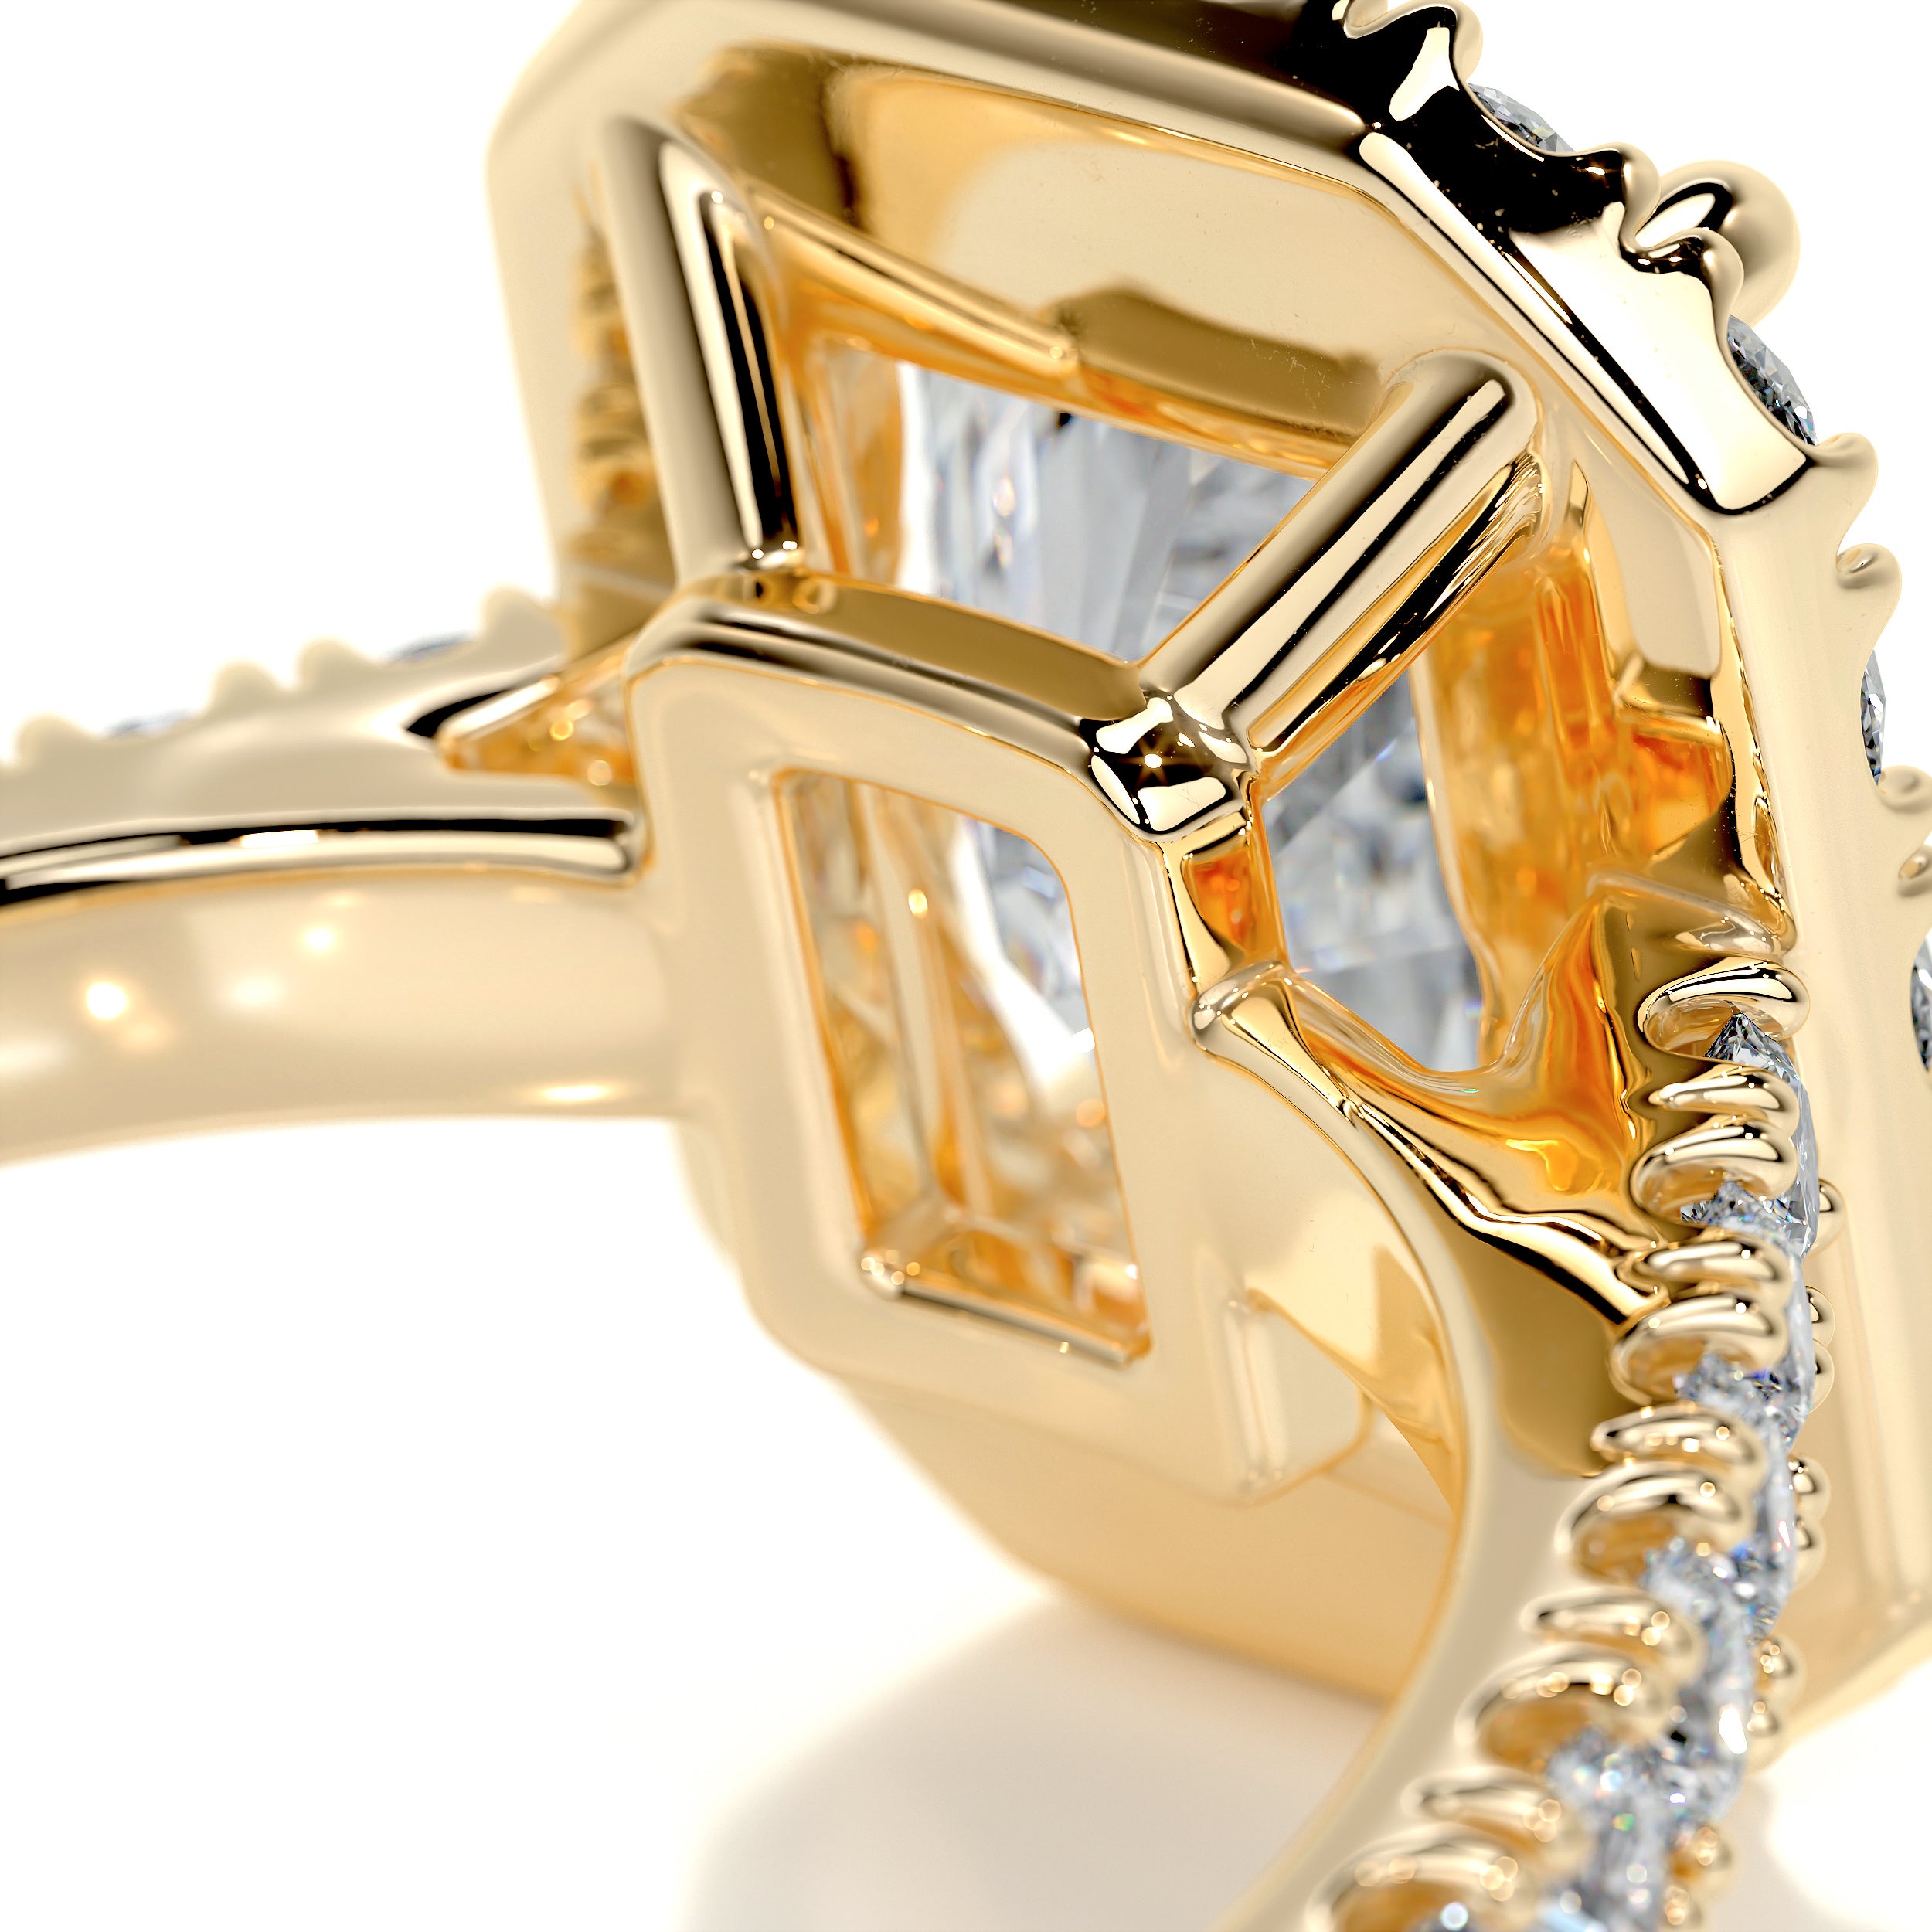 Andrea Moissanite & Diamonds Ring -18K Yellow Gold